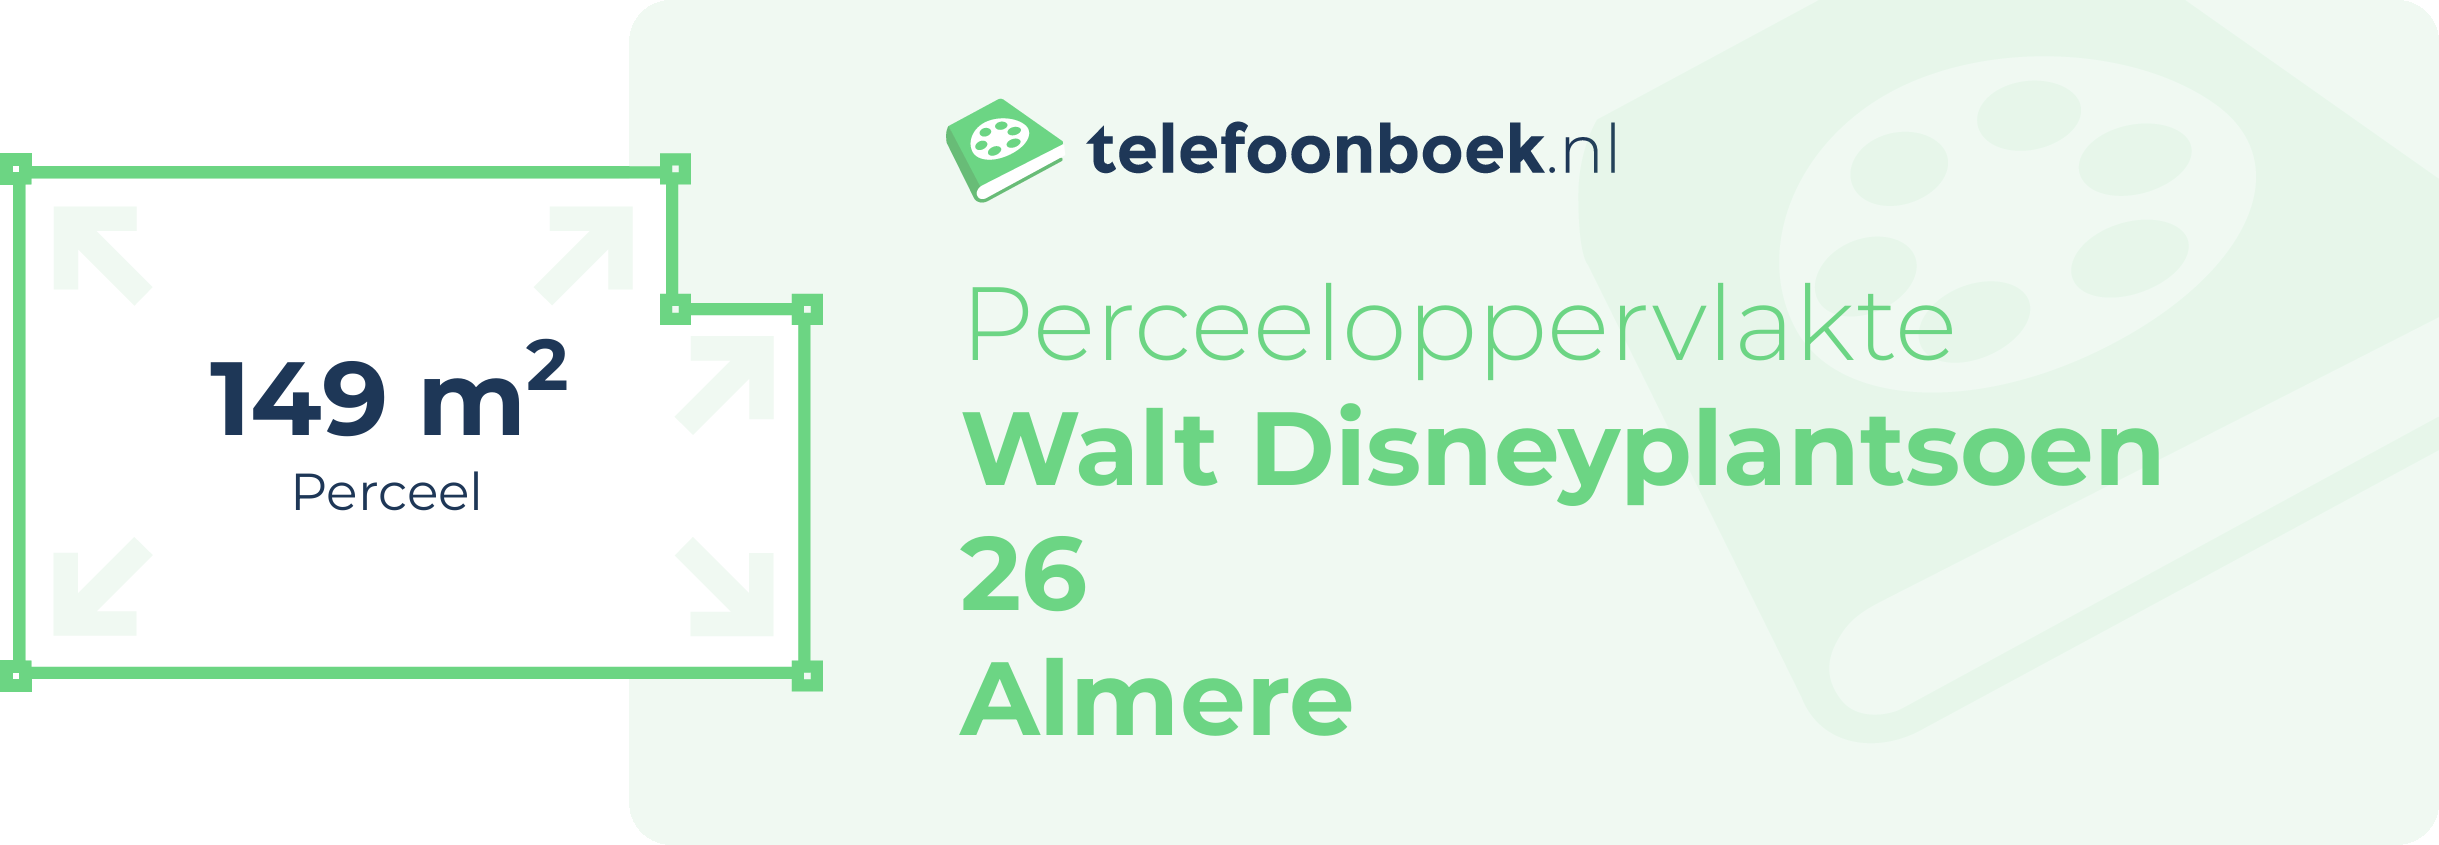 Perceeloppervlakte Walt Disneyplantsoen 26 Almere